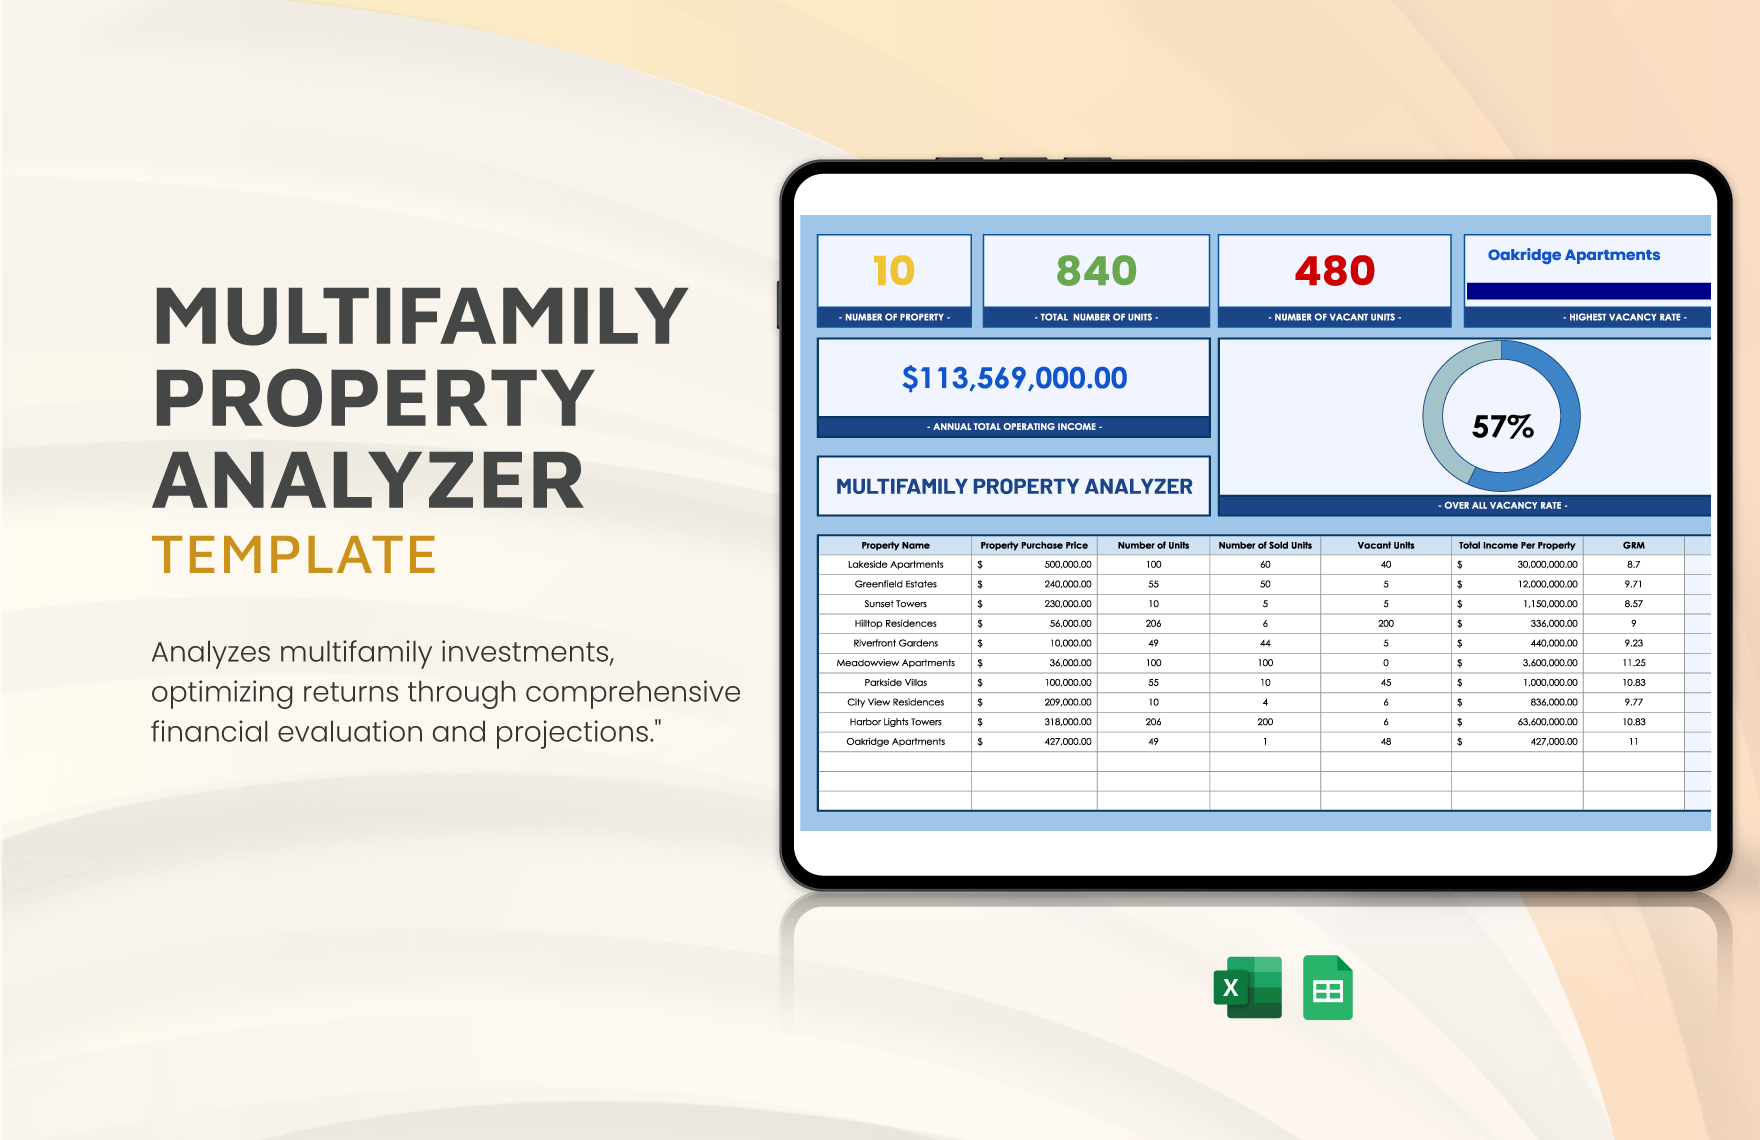 Multifamily Property Analyzer Template